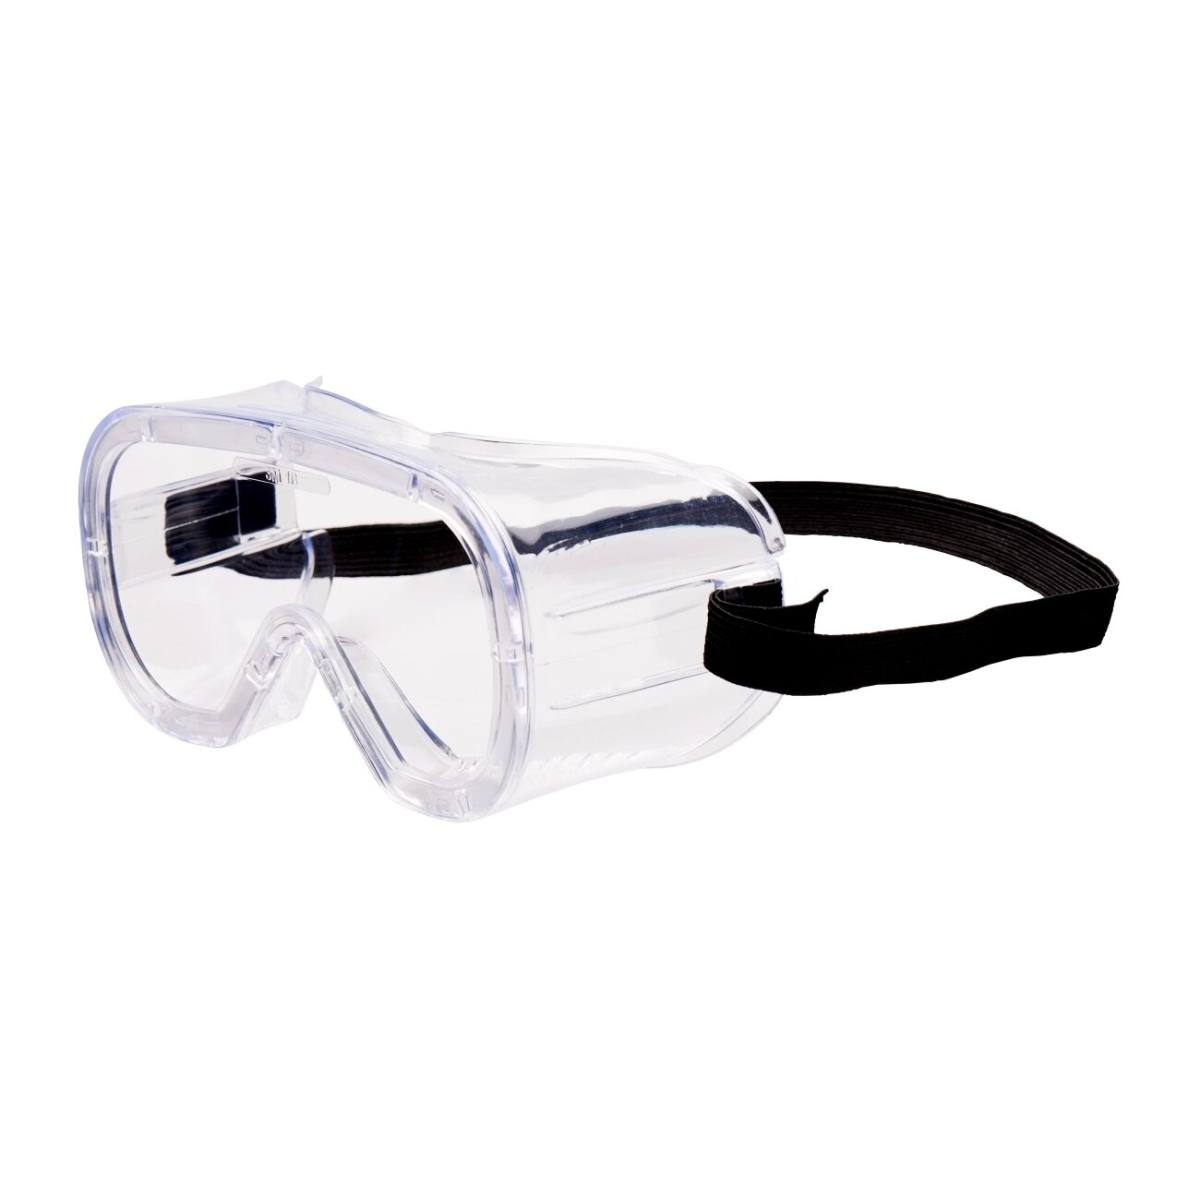 3M Full-vision goggles Budget Bud48AF, PC, clear, indirect ventilation